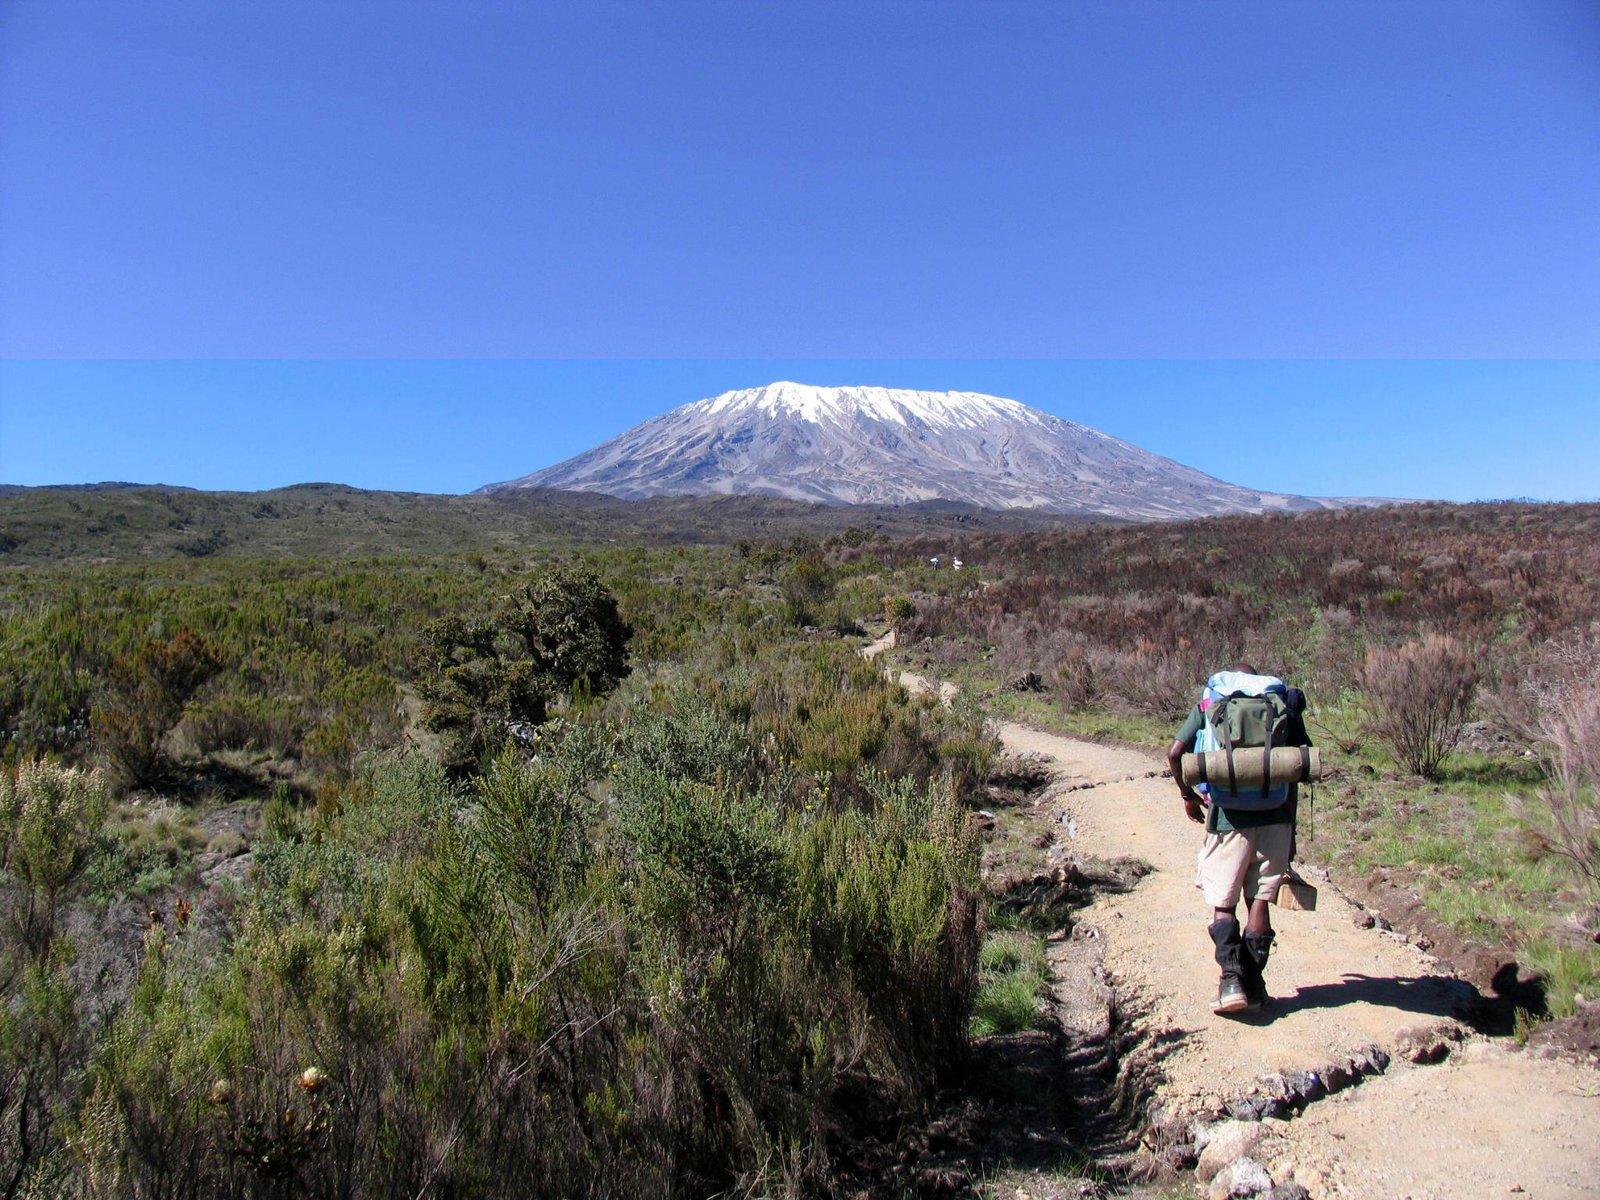 10 Reasons to Climb Mount Kilimanjaro